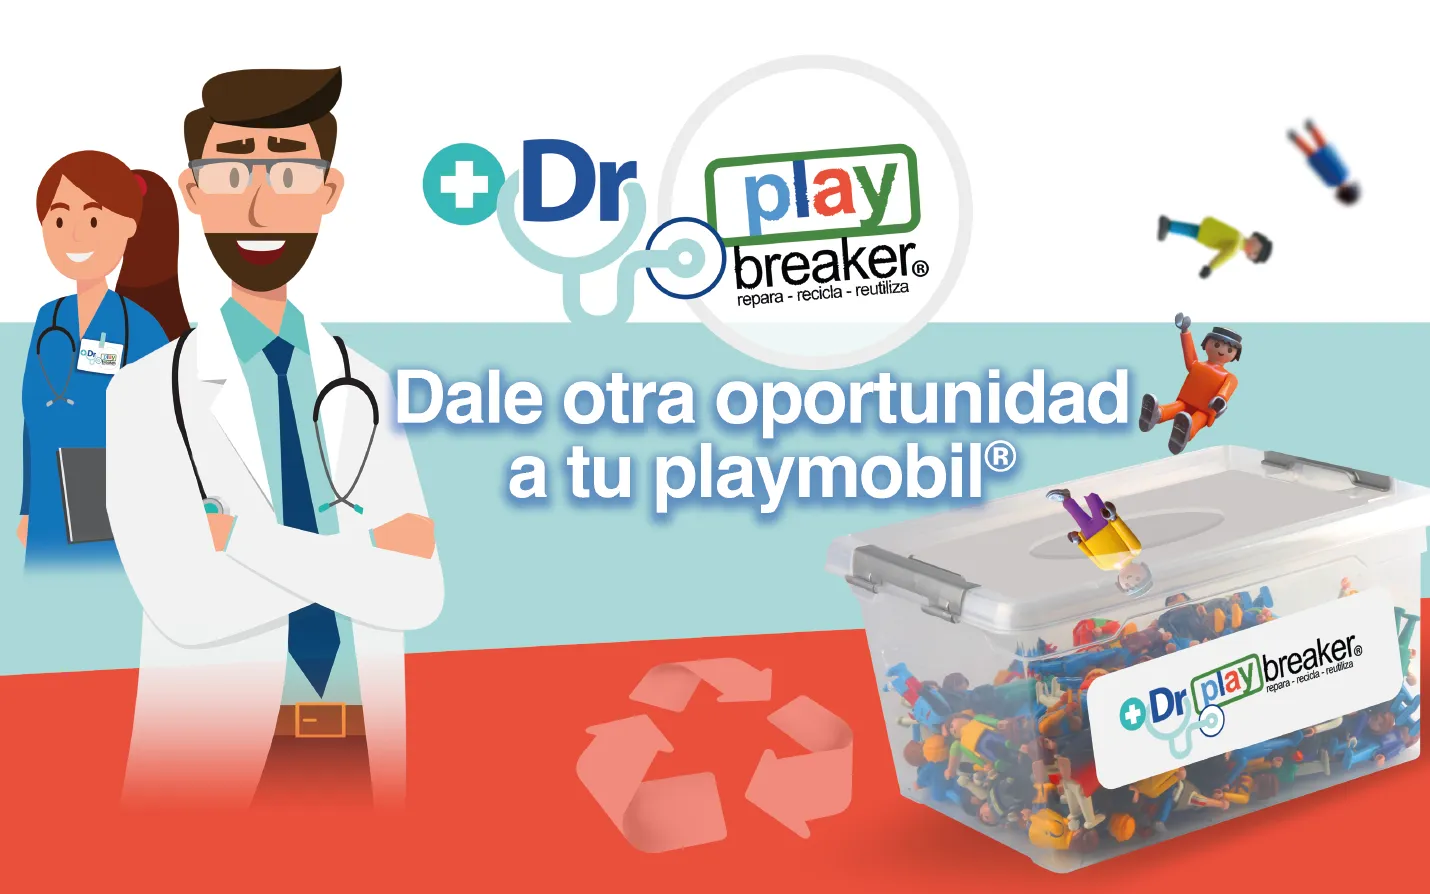 Dr PlayBraker: Dale otra oportunidad a tu playmobil